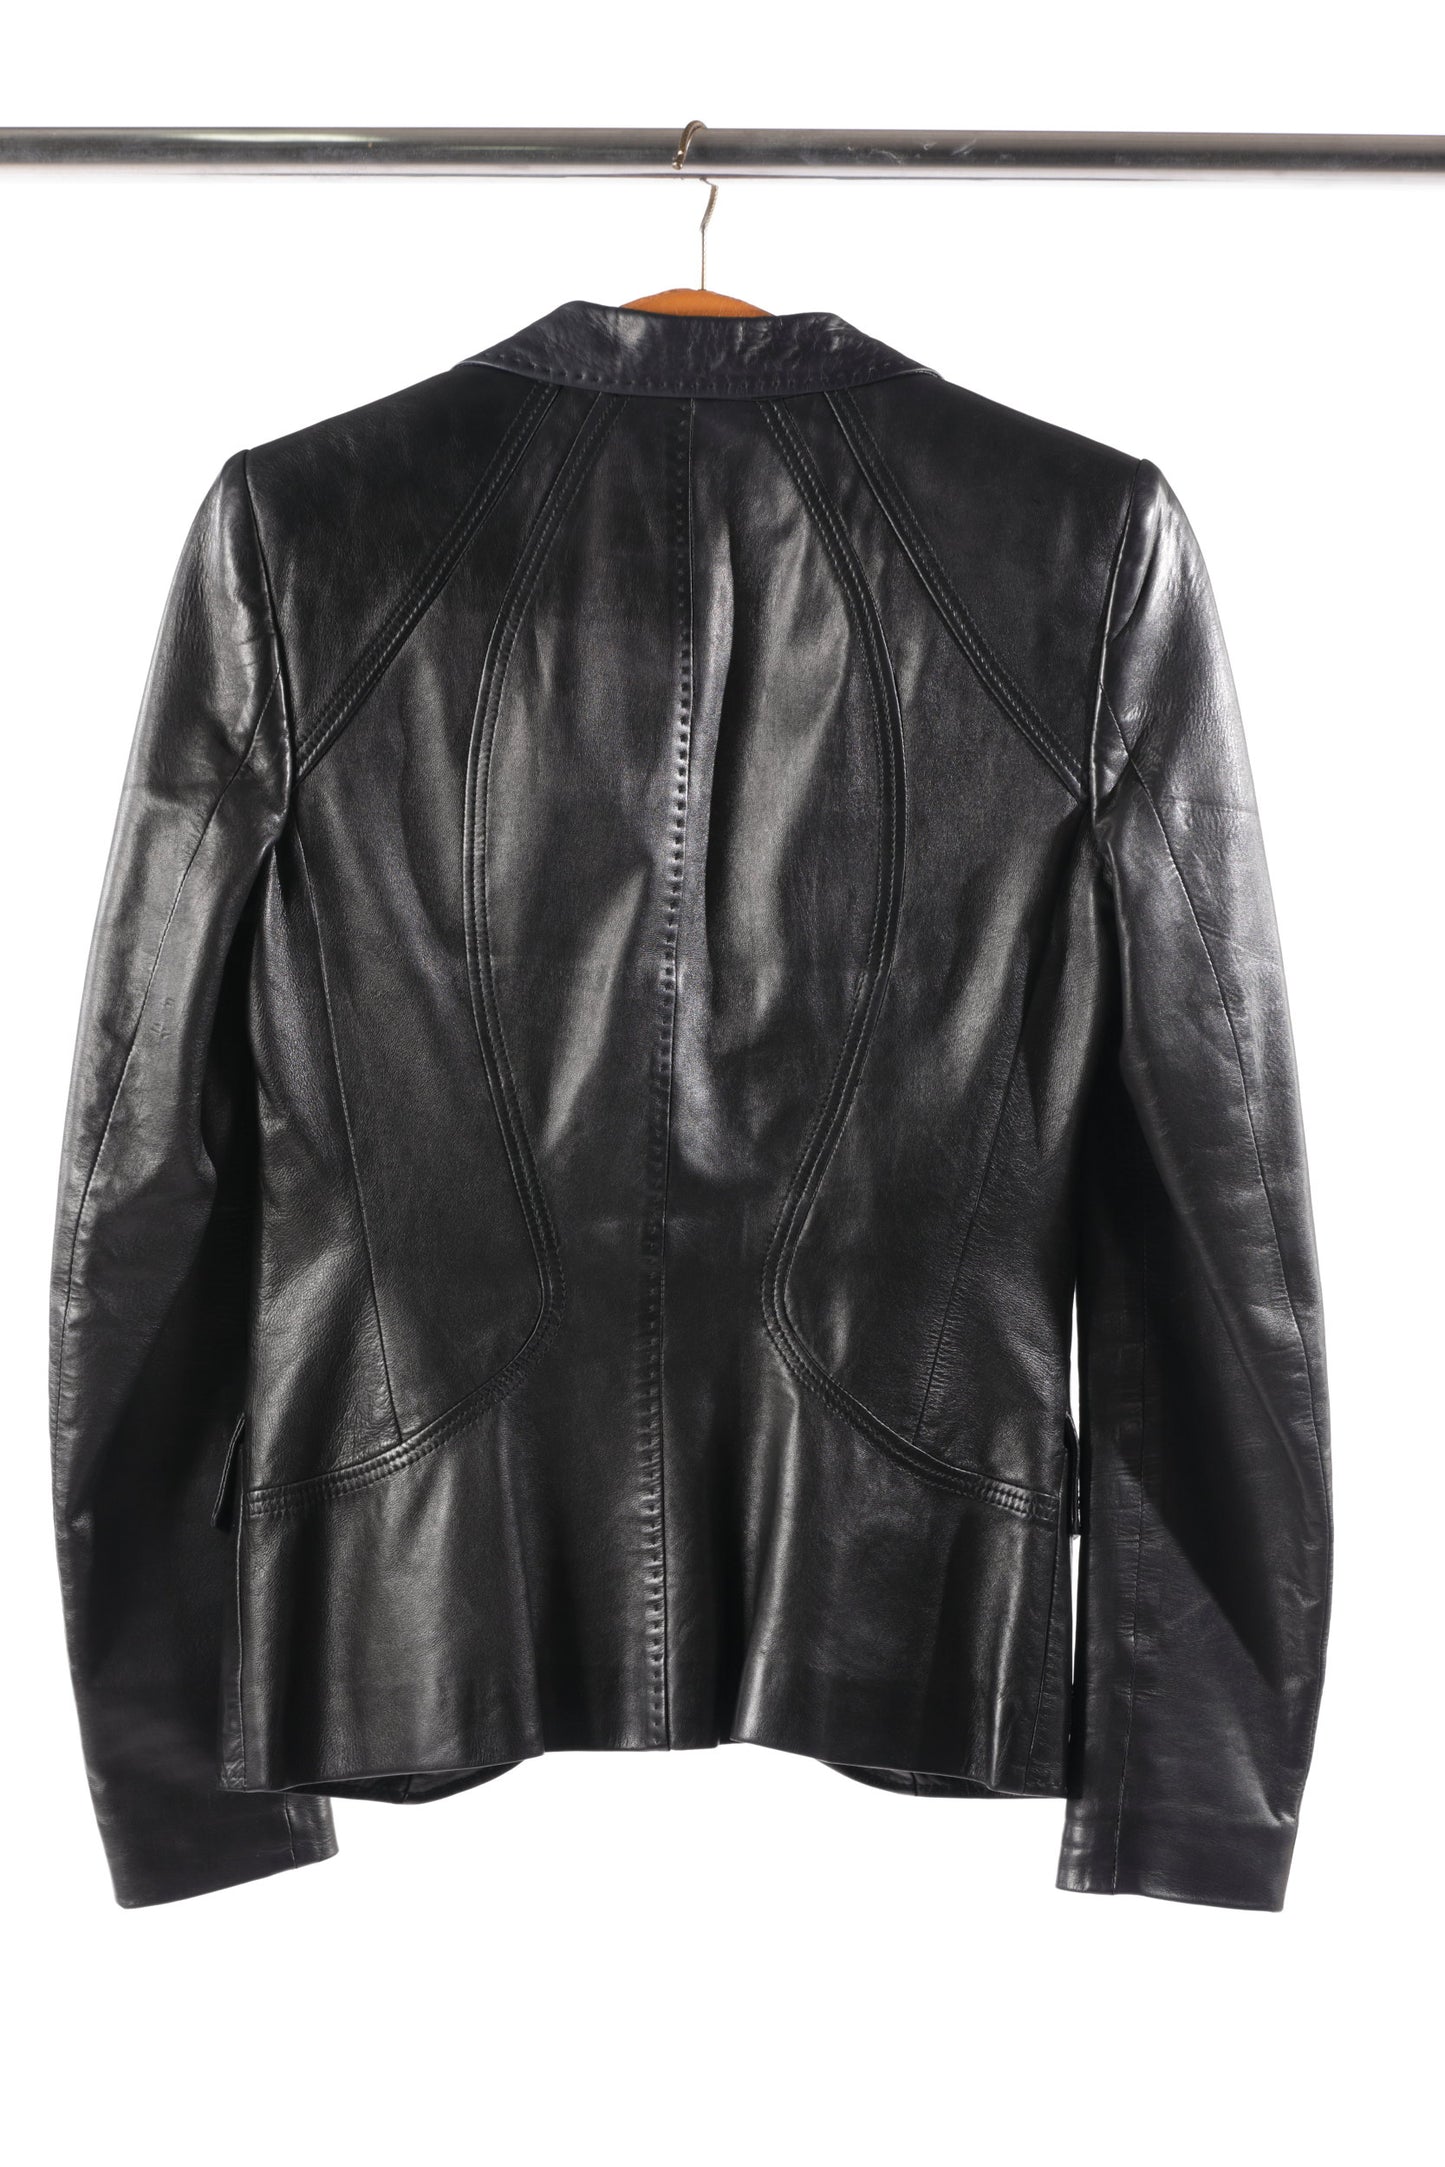 Gucci Tom Ford jacket